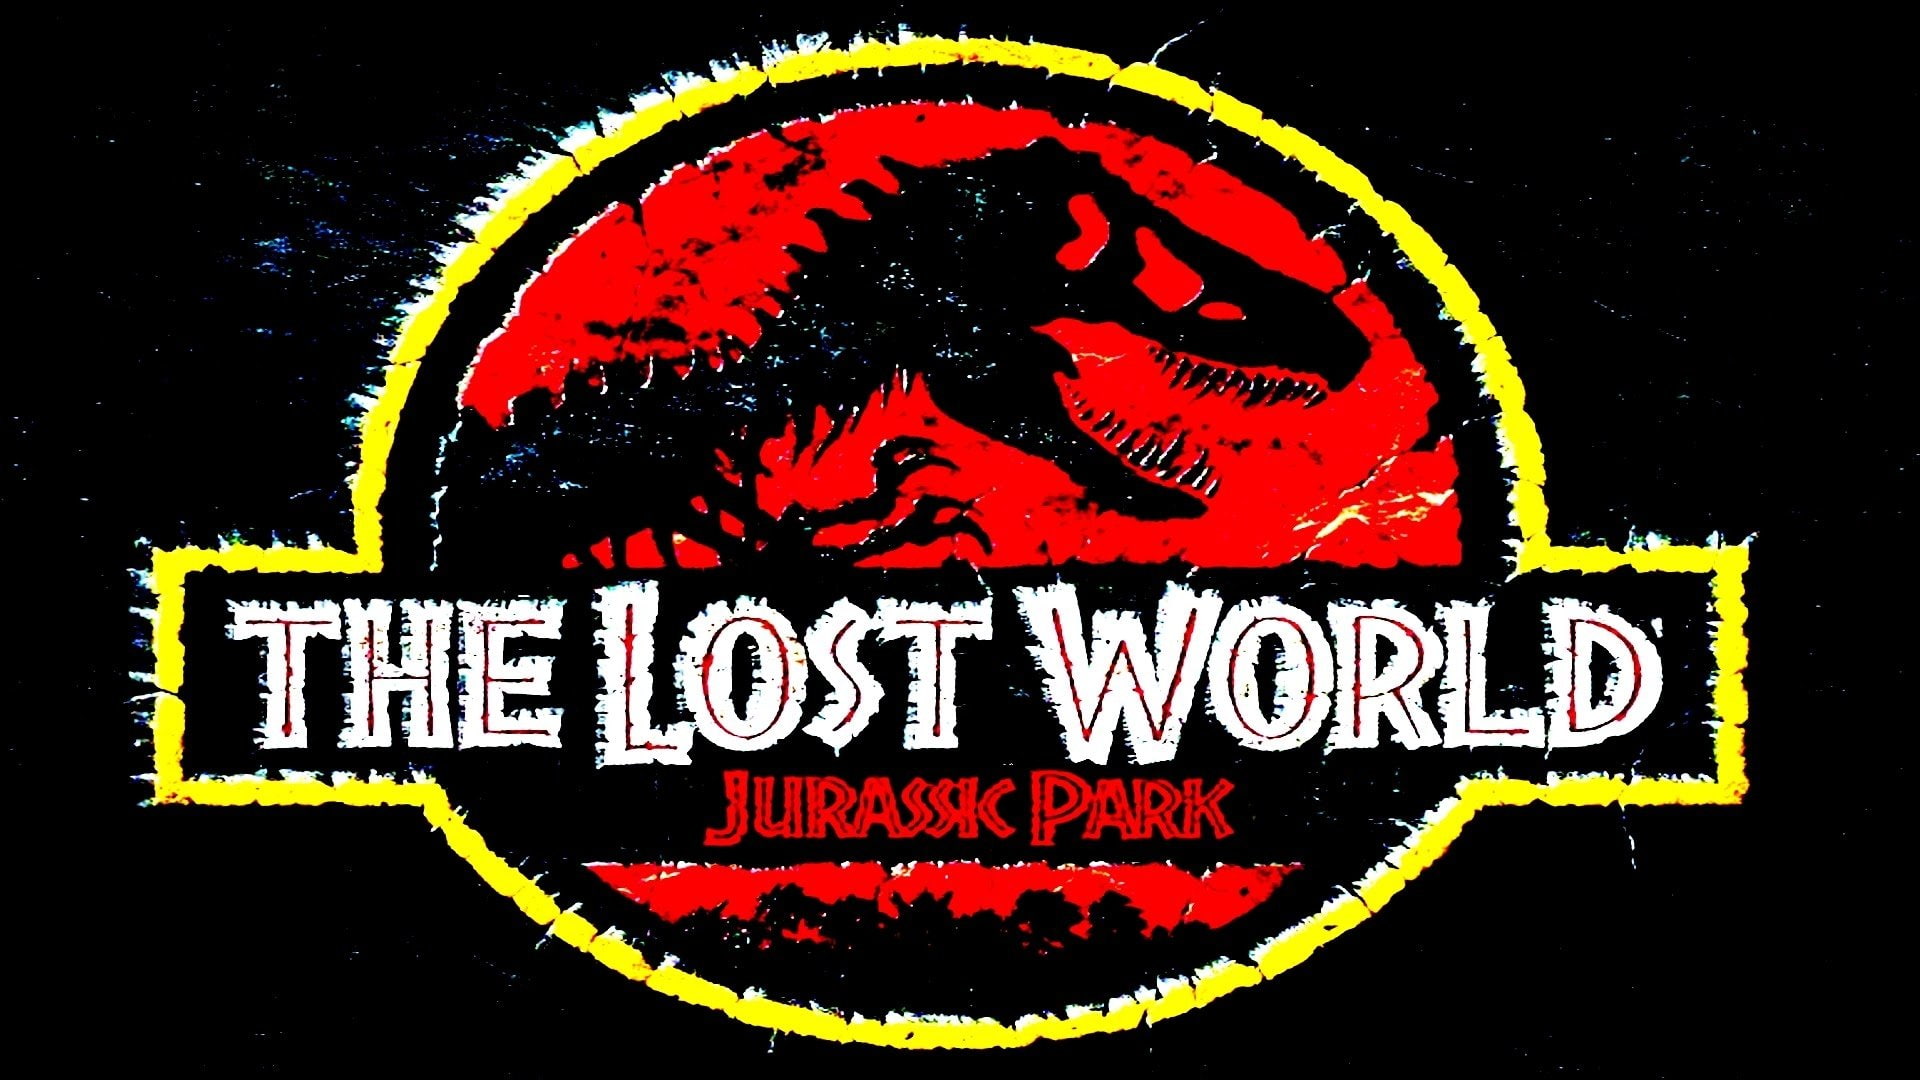 Jurassic Park, The Lost World: Jurassic Park